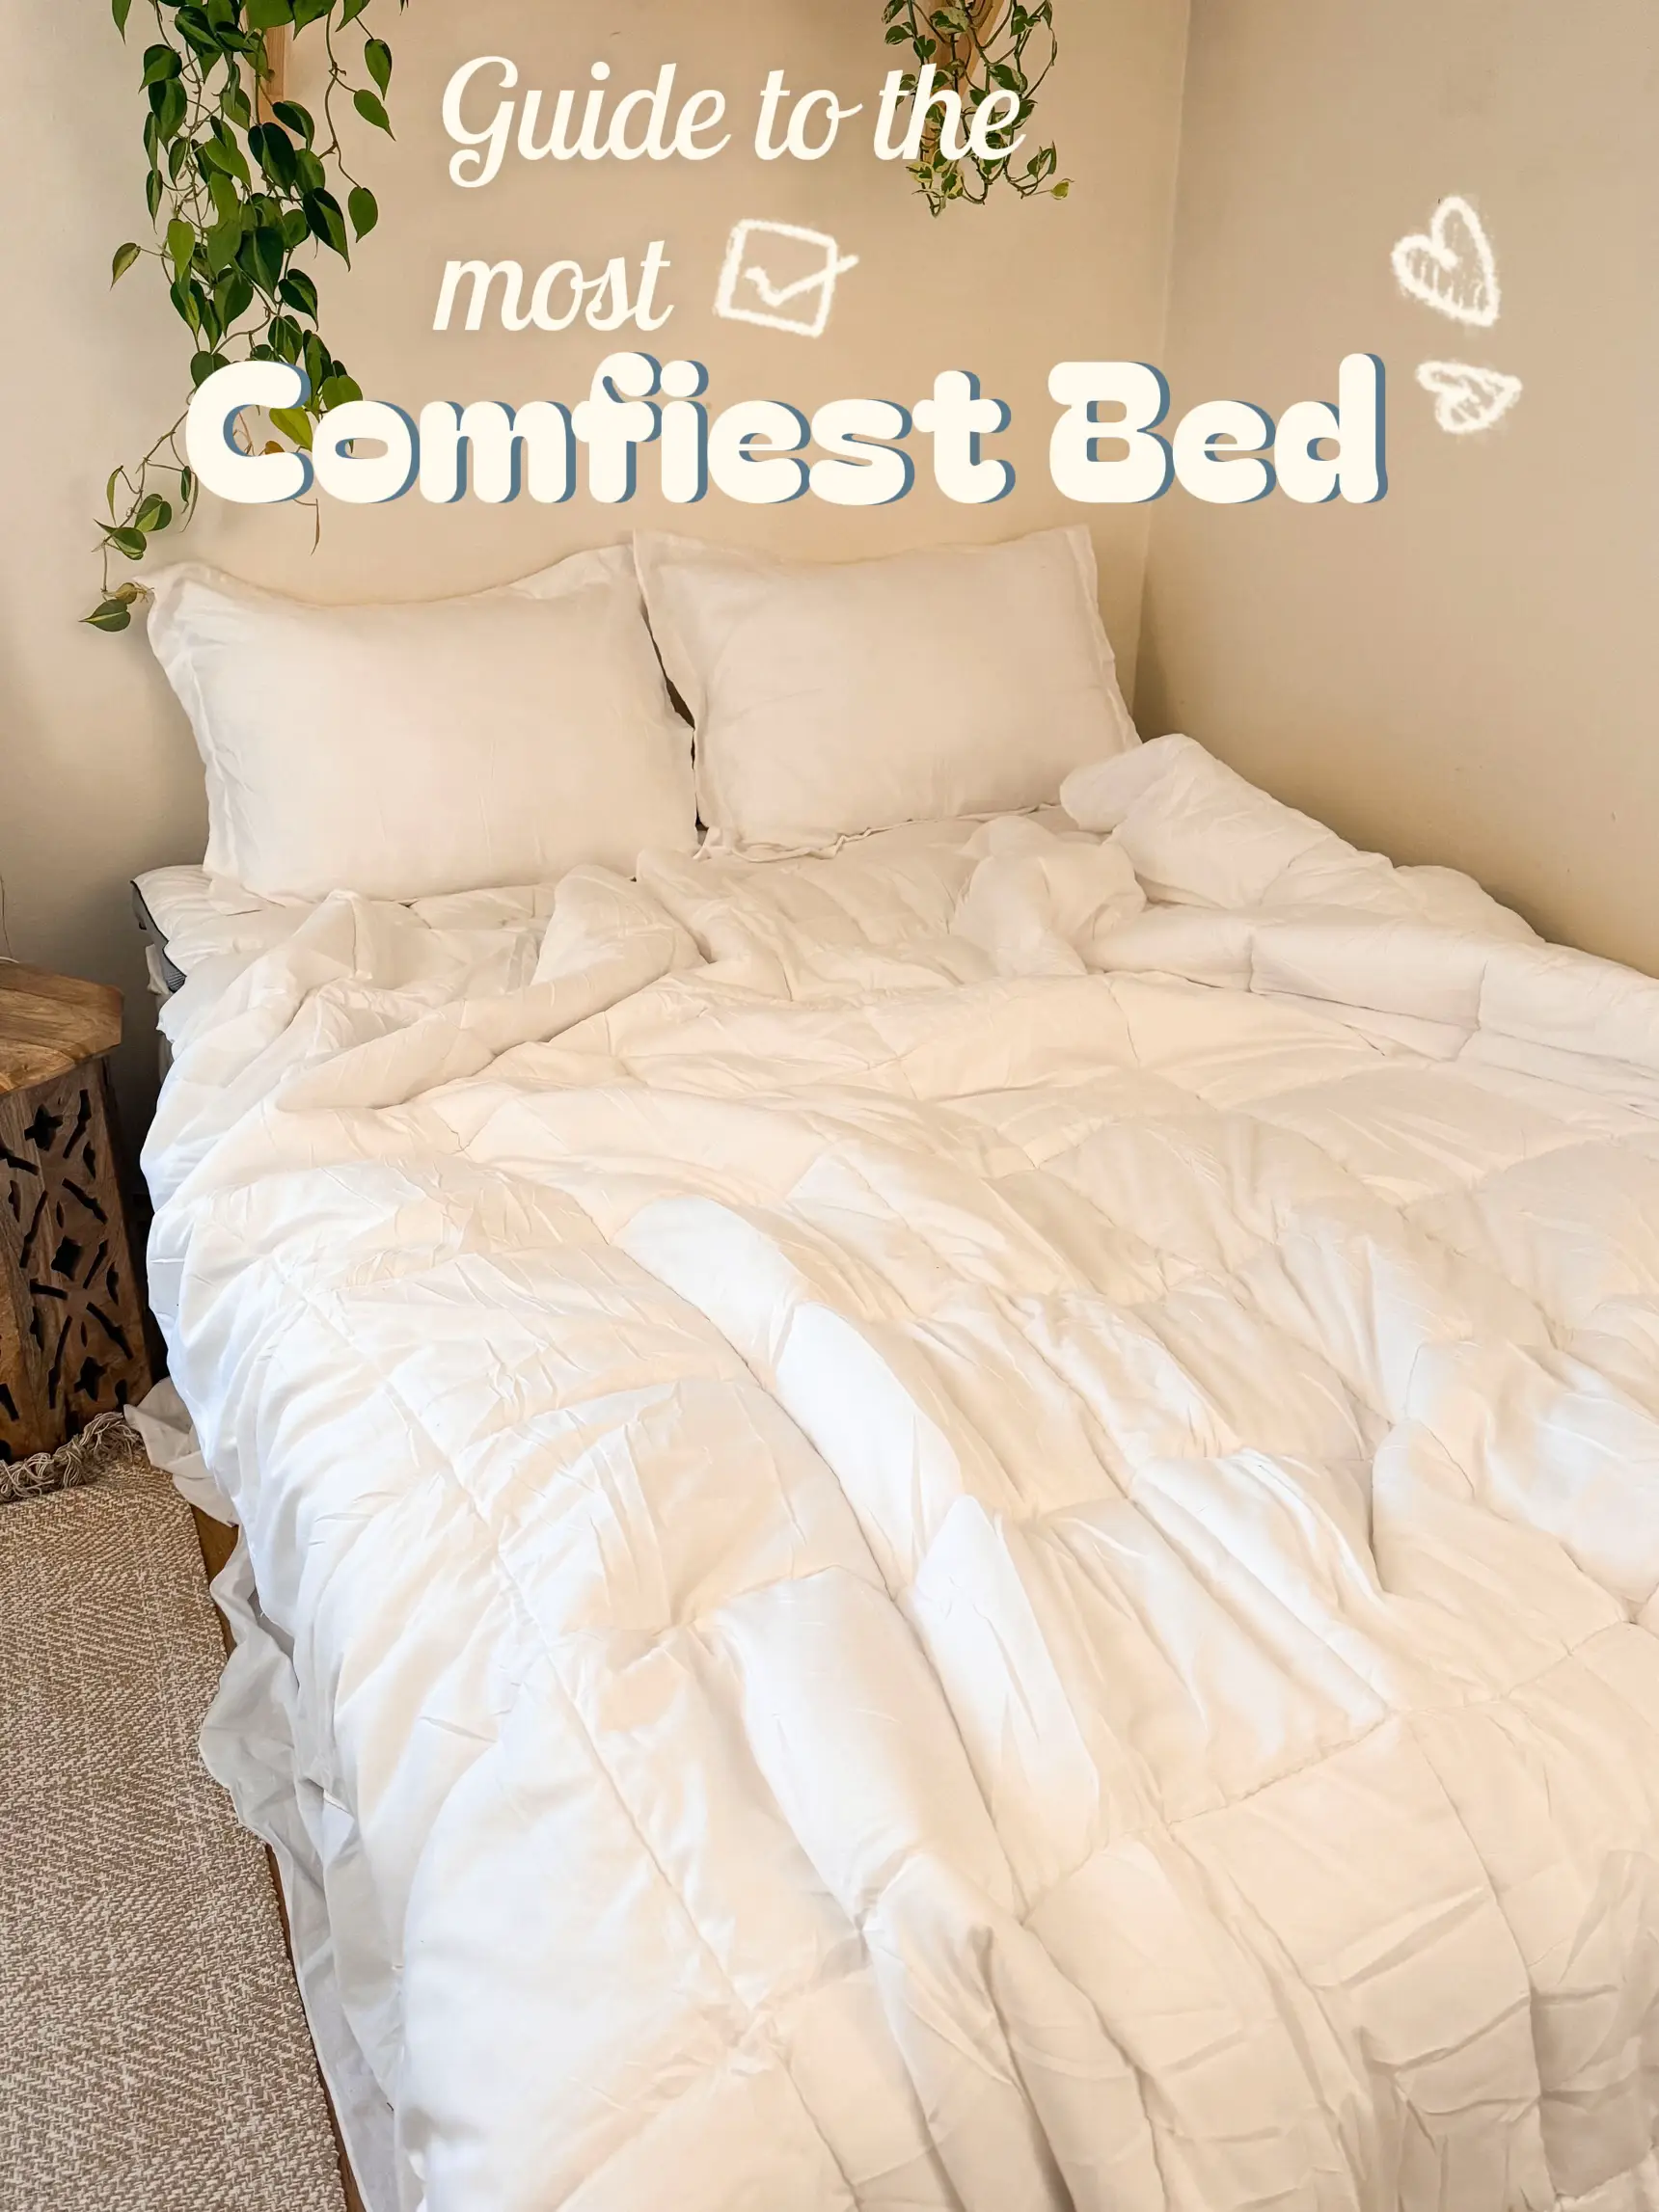  Utopia Bedding Full Elastic Bed Ruffle - Easy Wrap